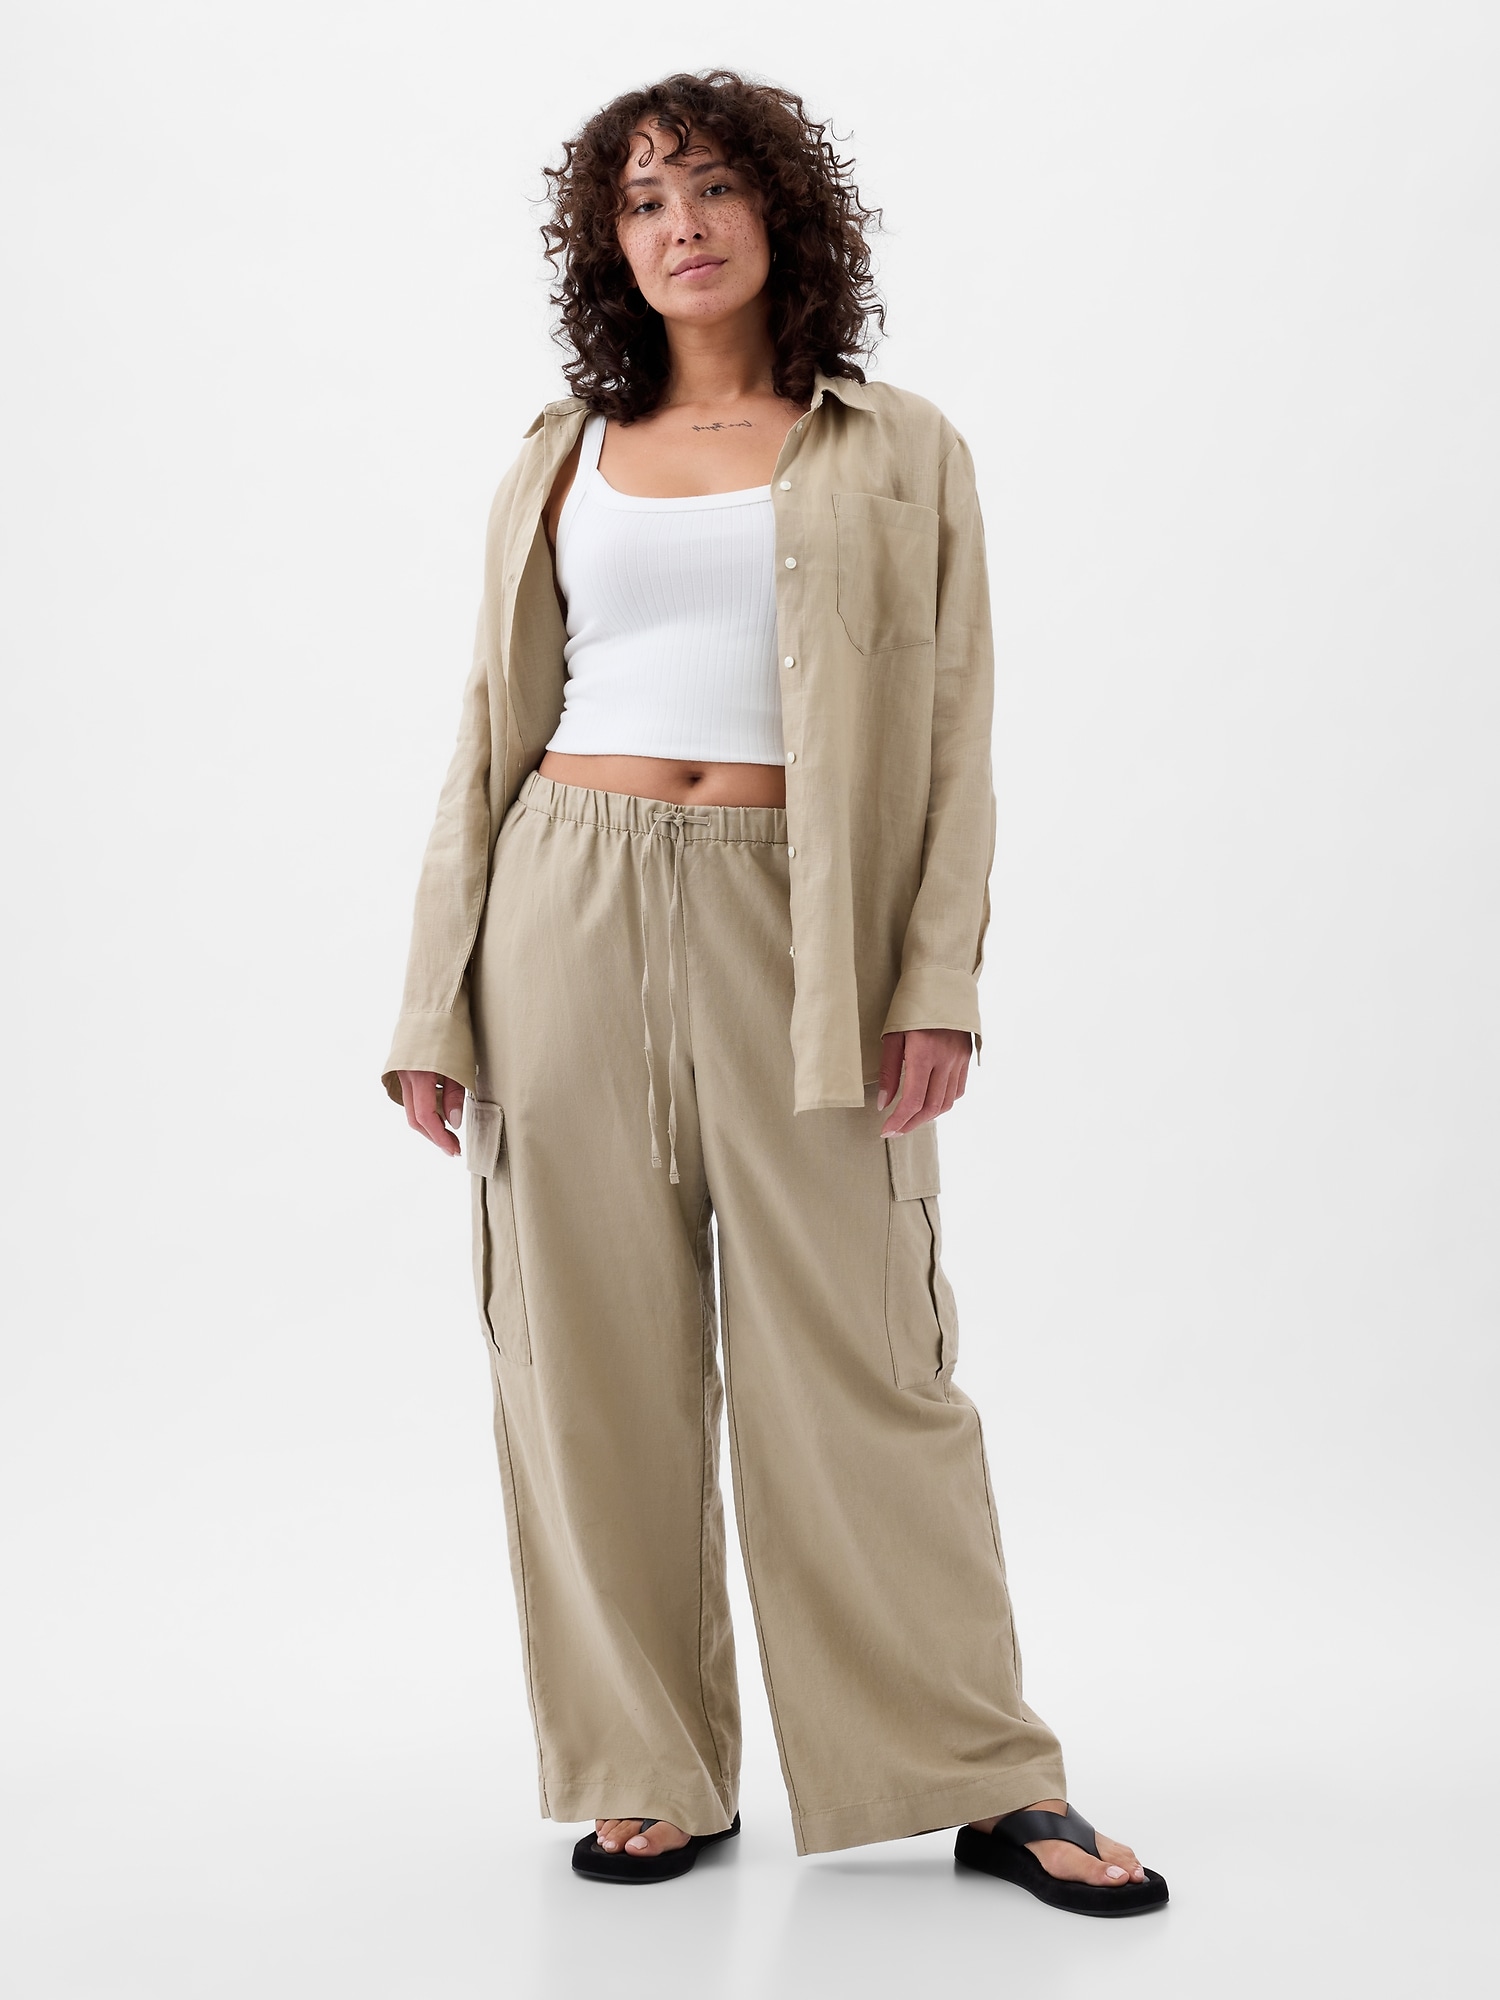 Linen Cargo Pants for Women Multi Pocket, Elastic Waist, Adjustable Hem  Available in Multiple Colors 